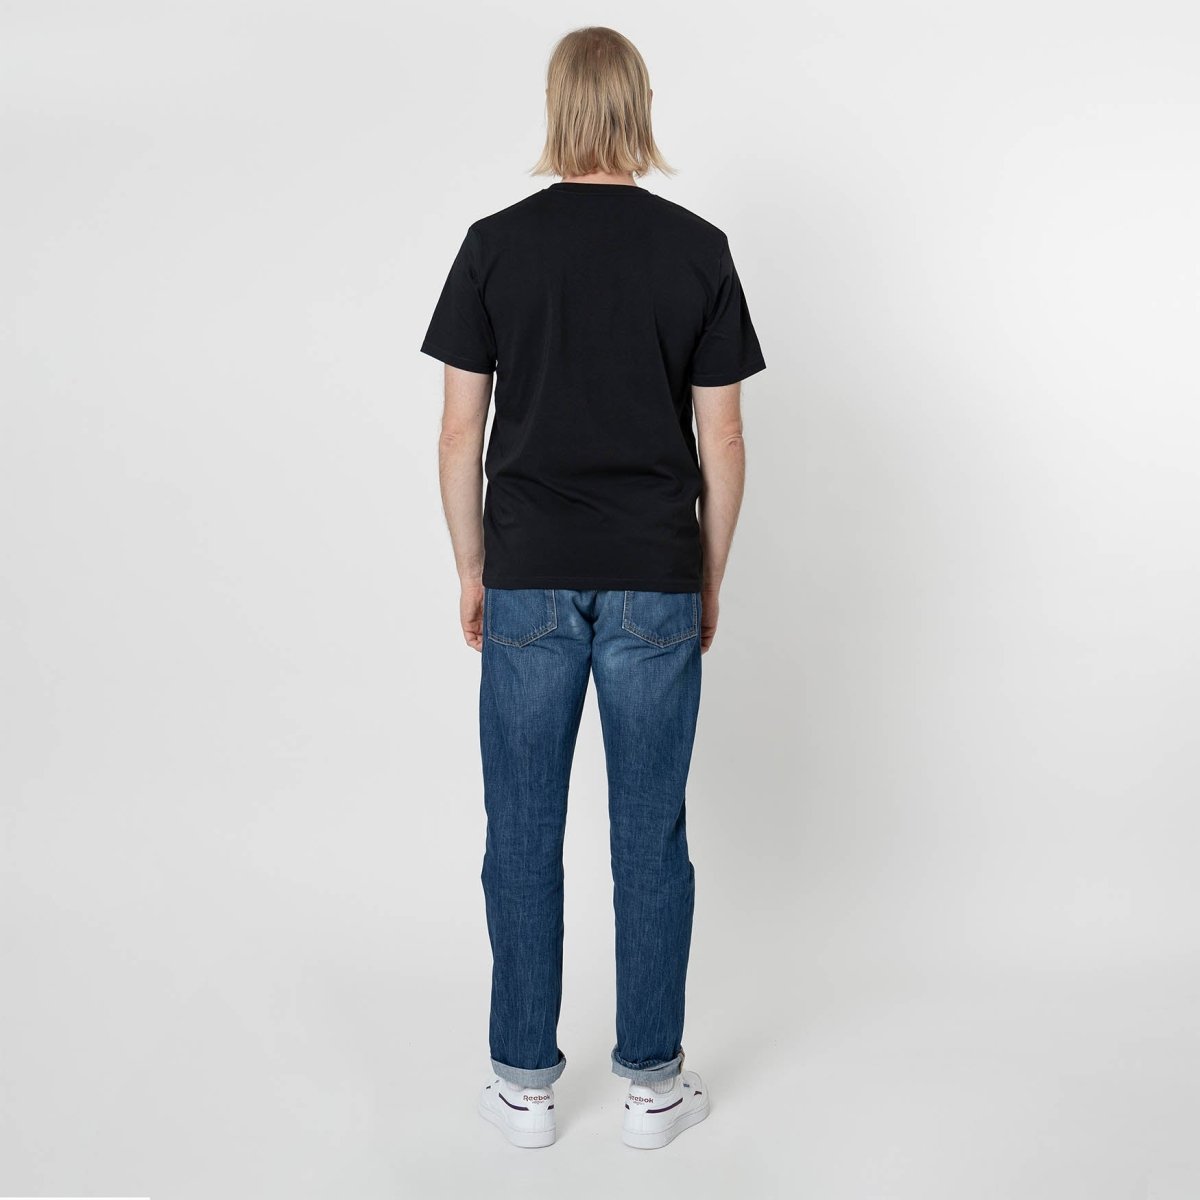 Hang Loose – T-Shirt schwarz - fyngers